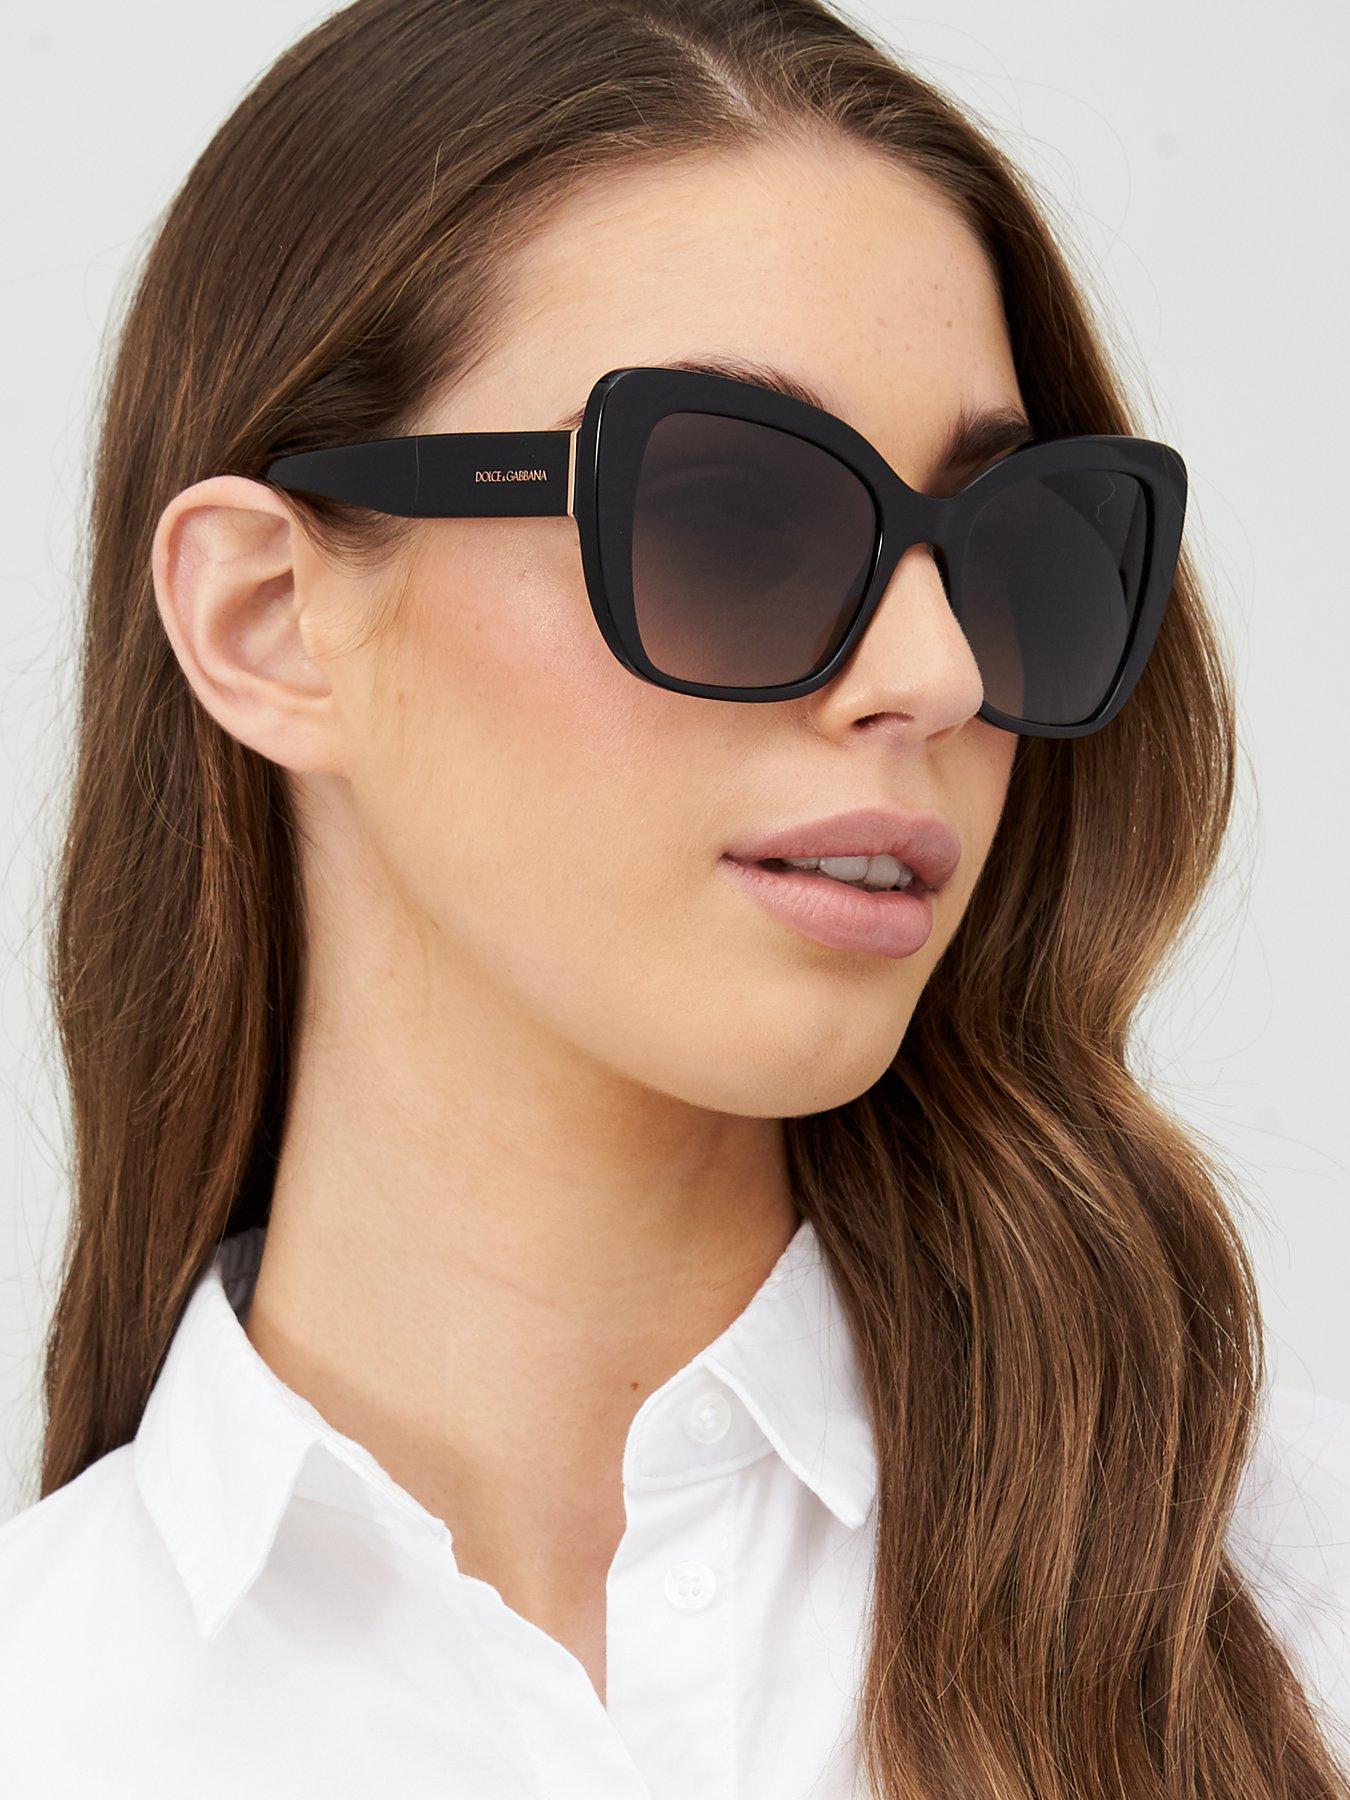 dolce and gabbana oversized sunglasses